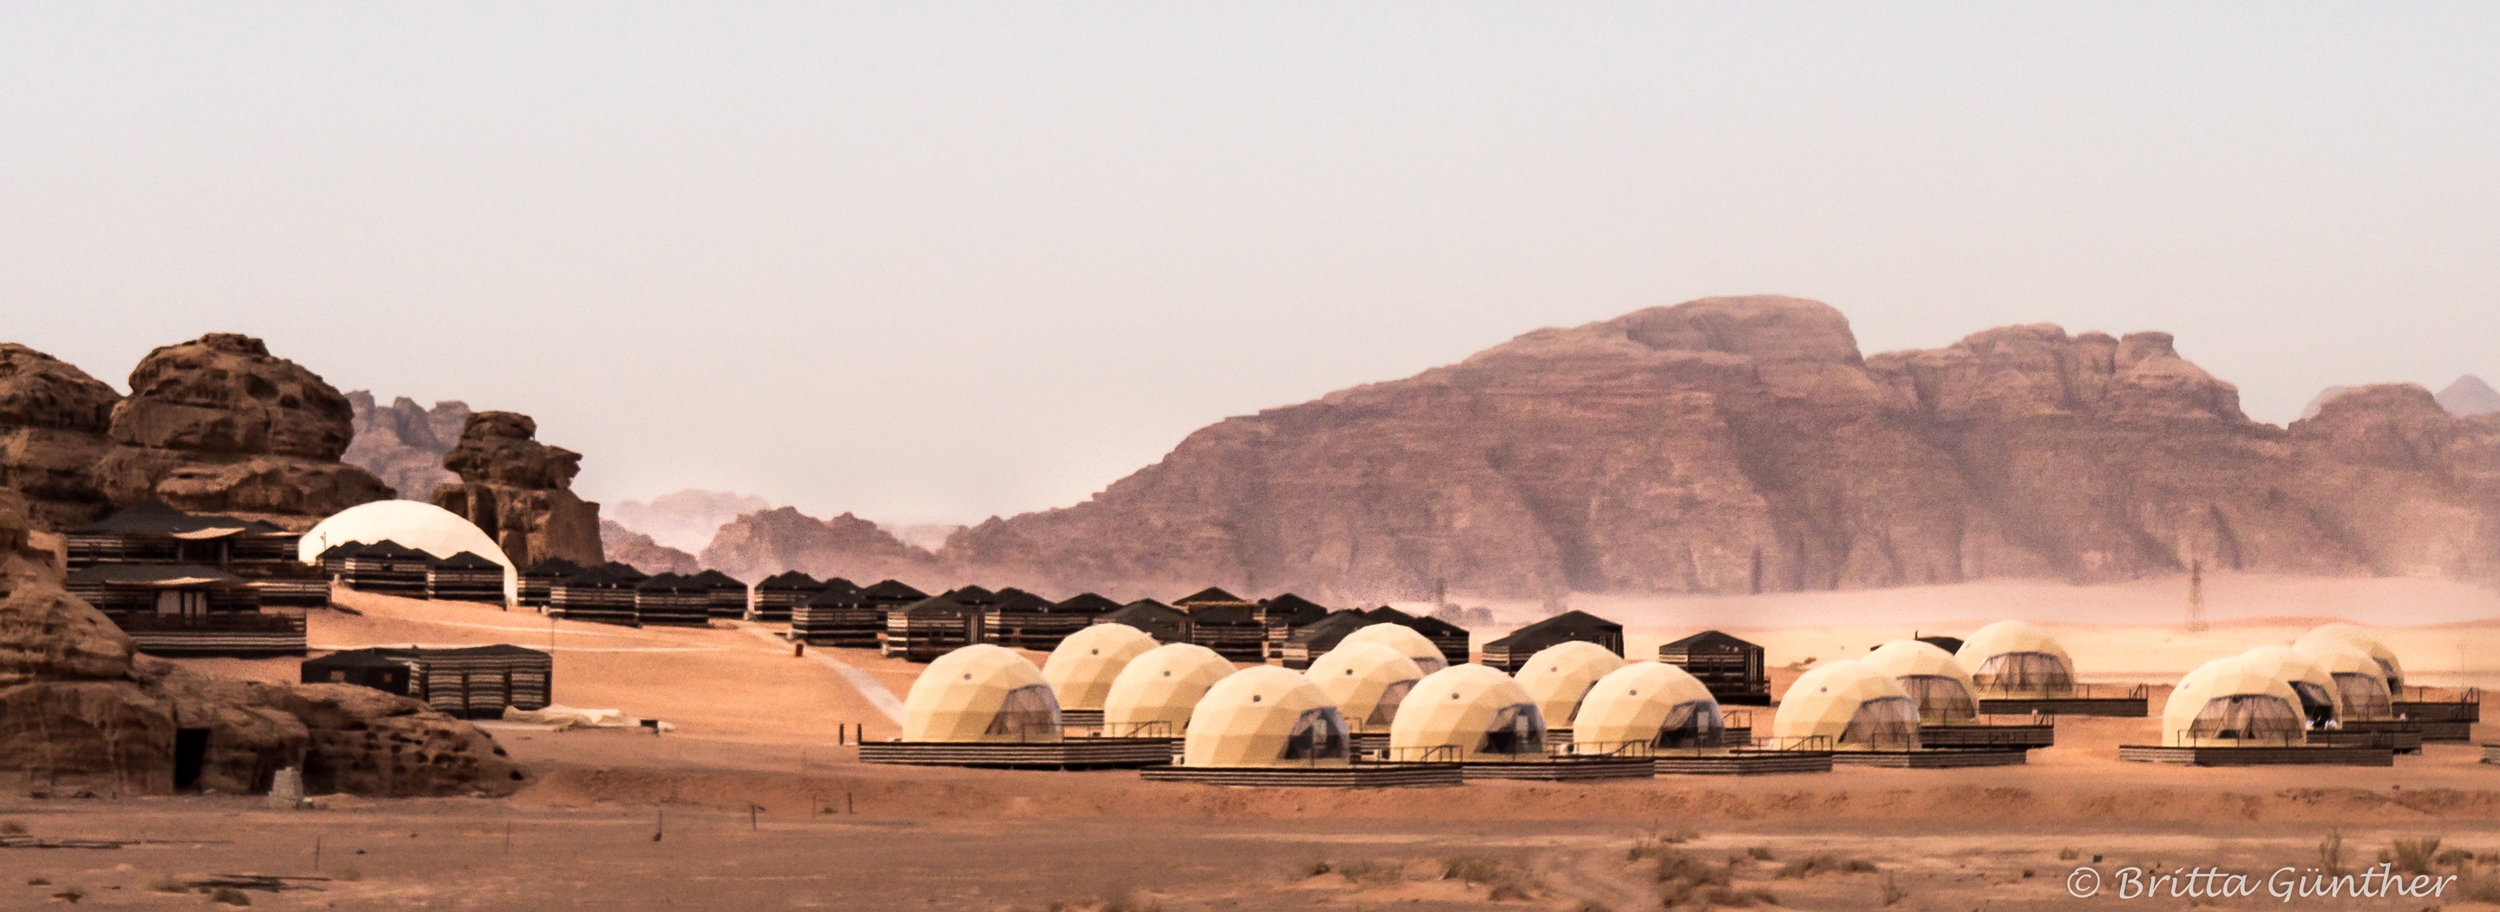 Sun City Camp - Wadi Rum